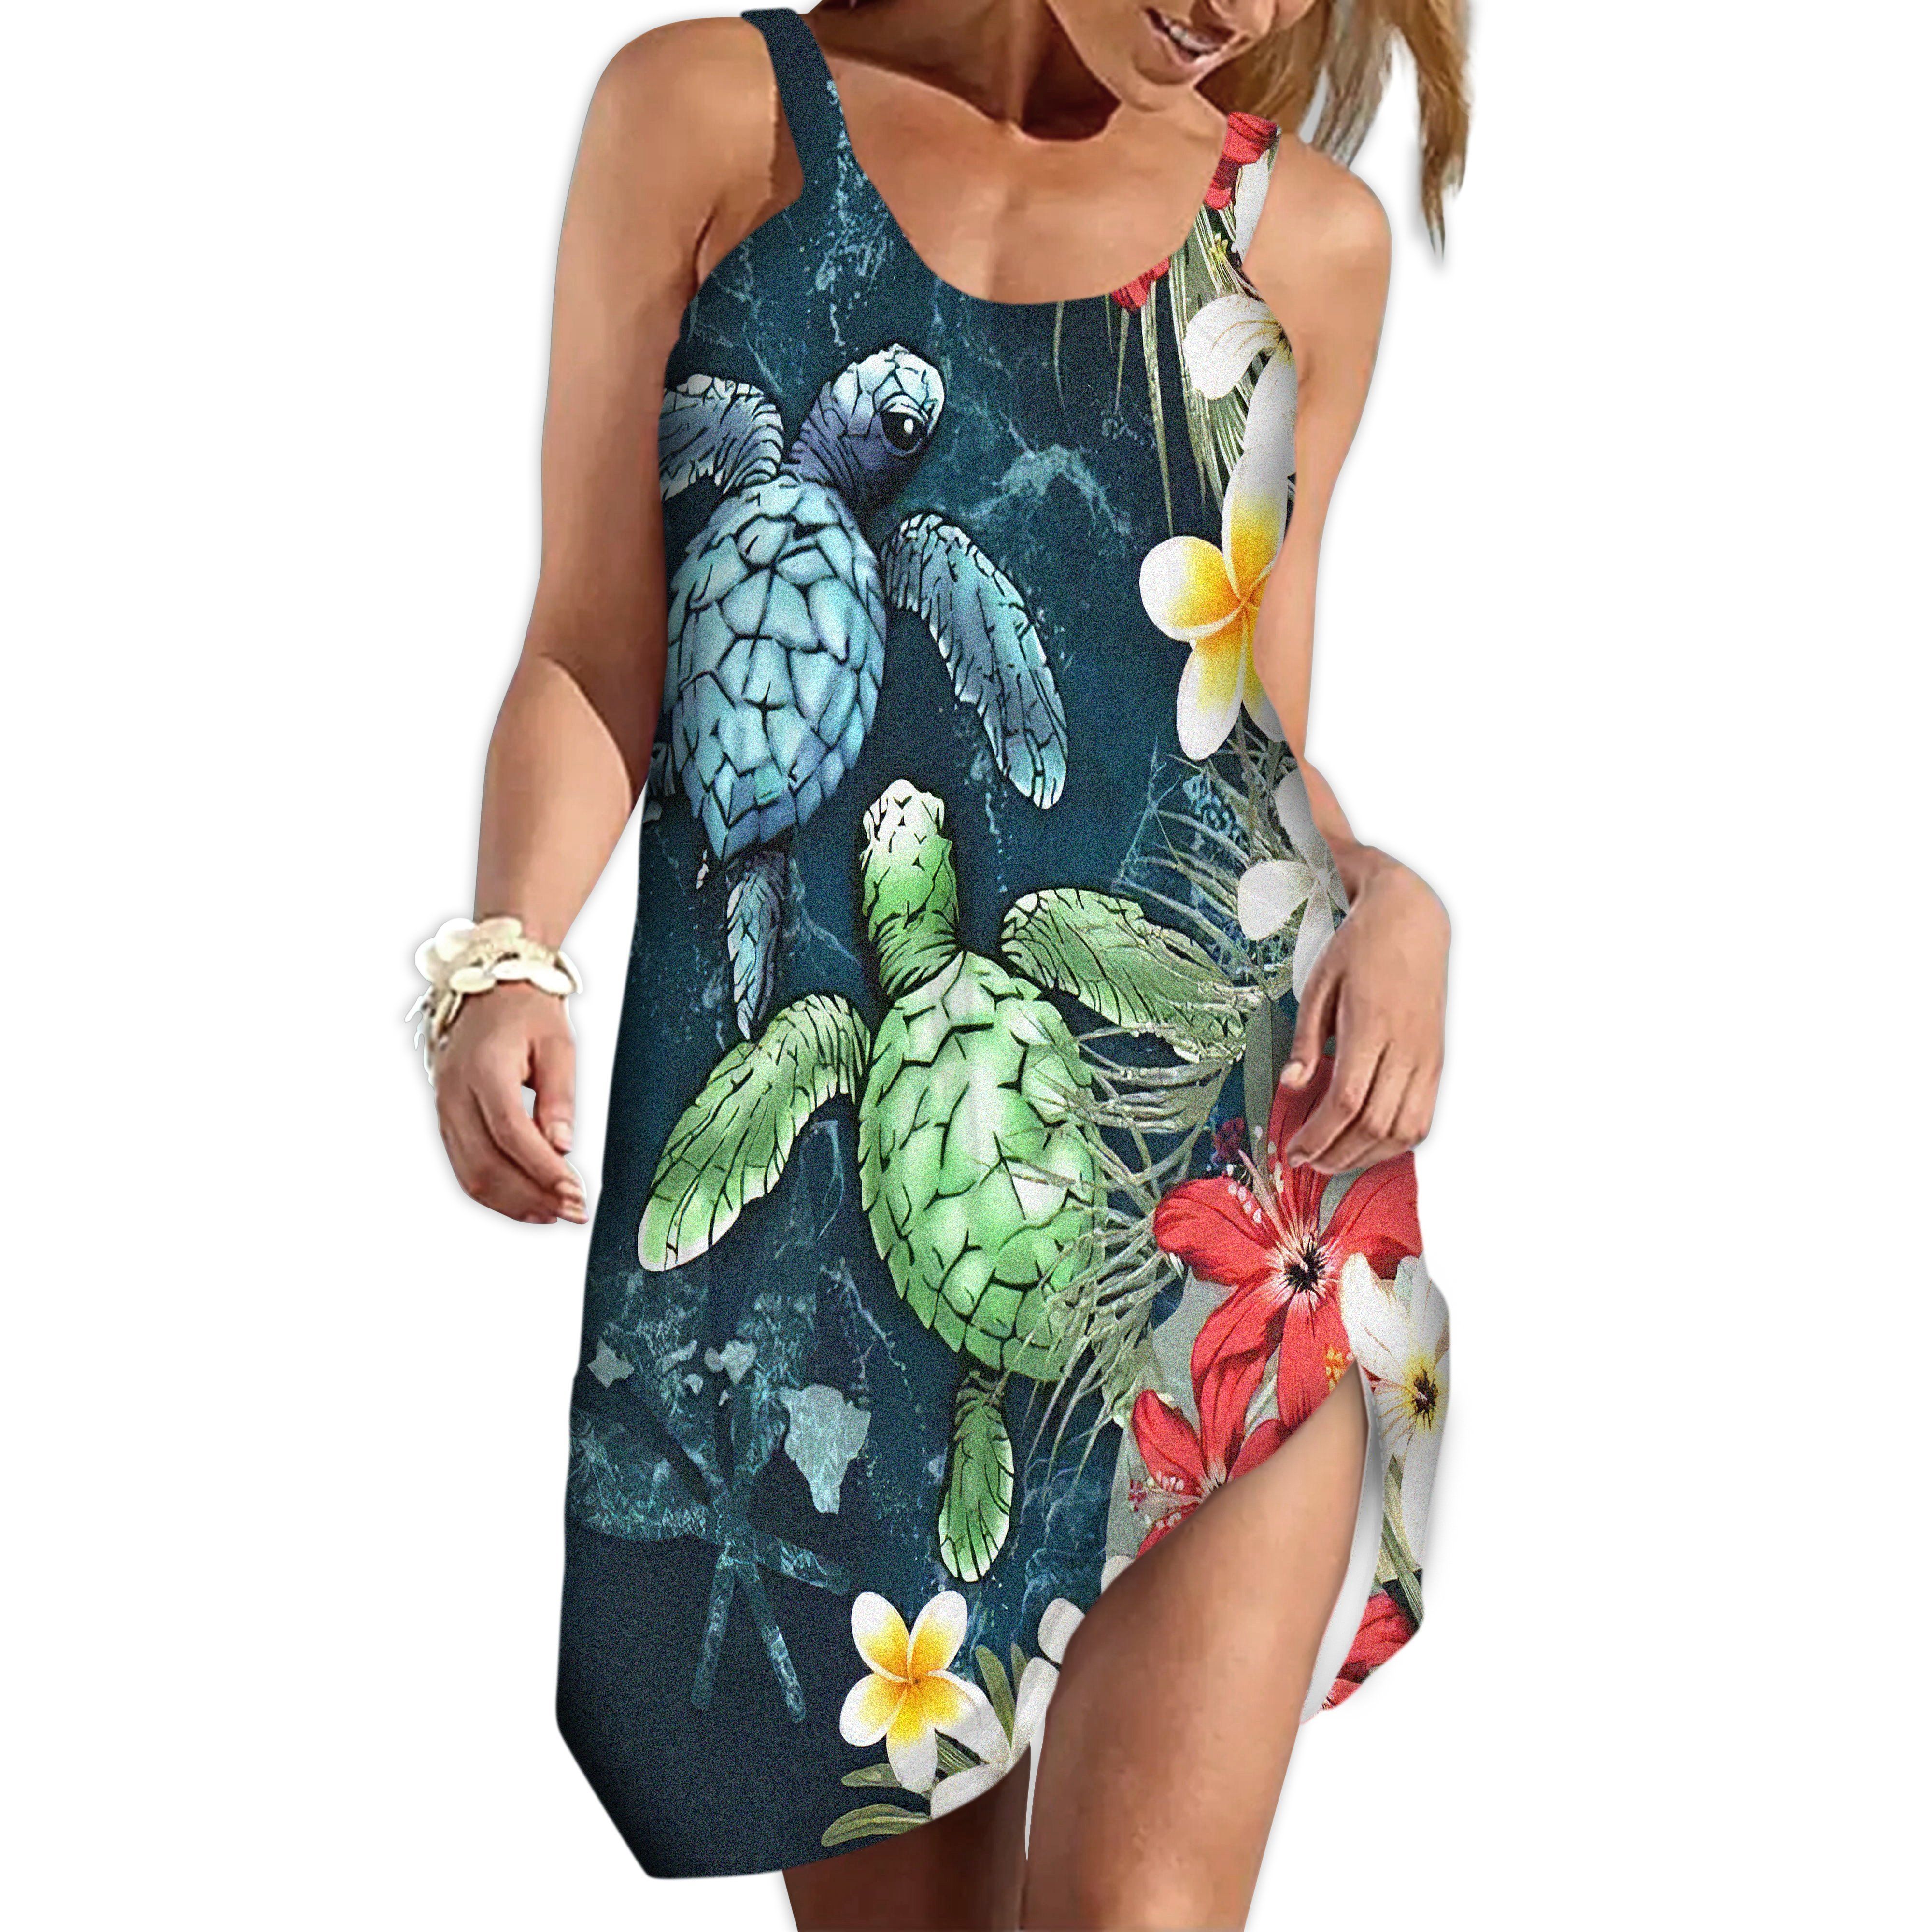 Sea Turtle Tropical Hibiscus And Plumeria Custom Short Sleeve Shirt